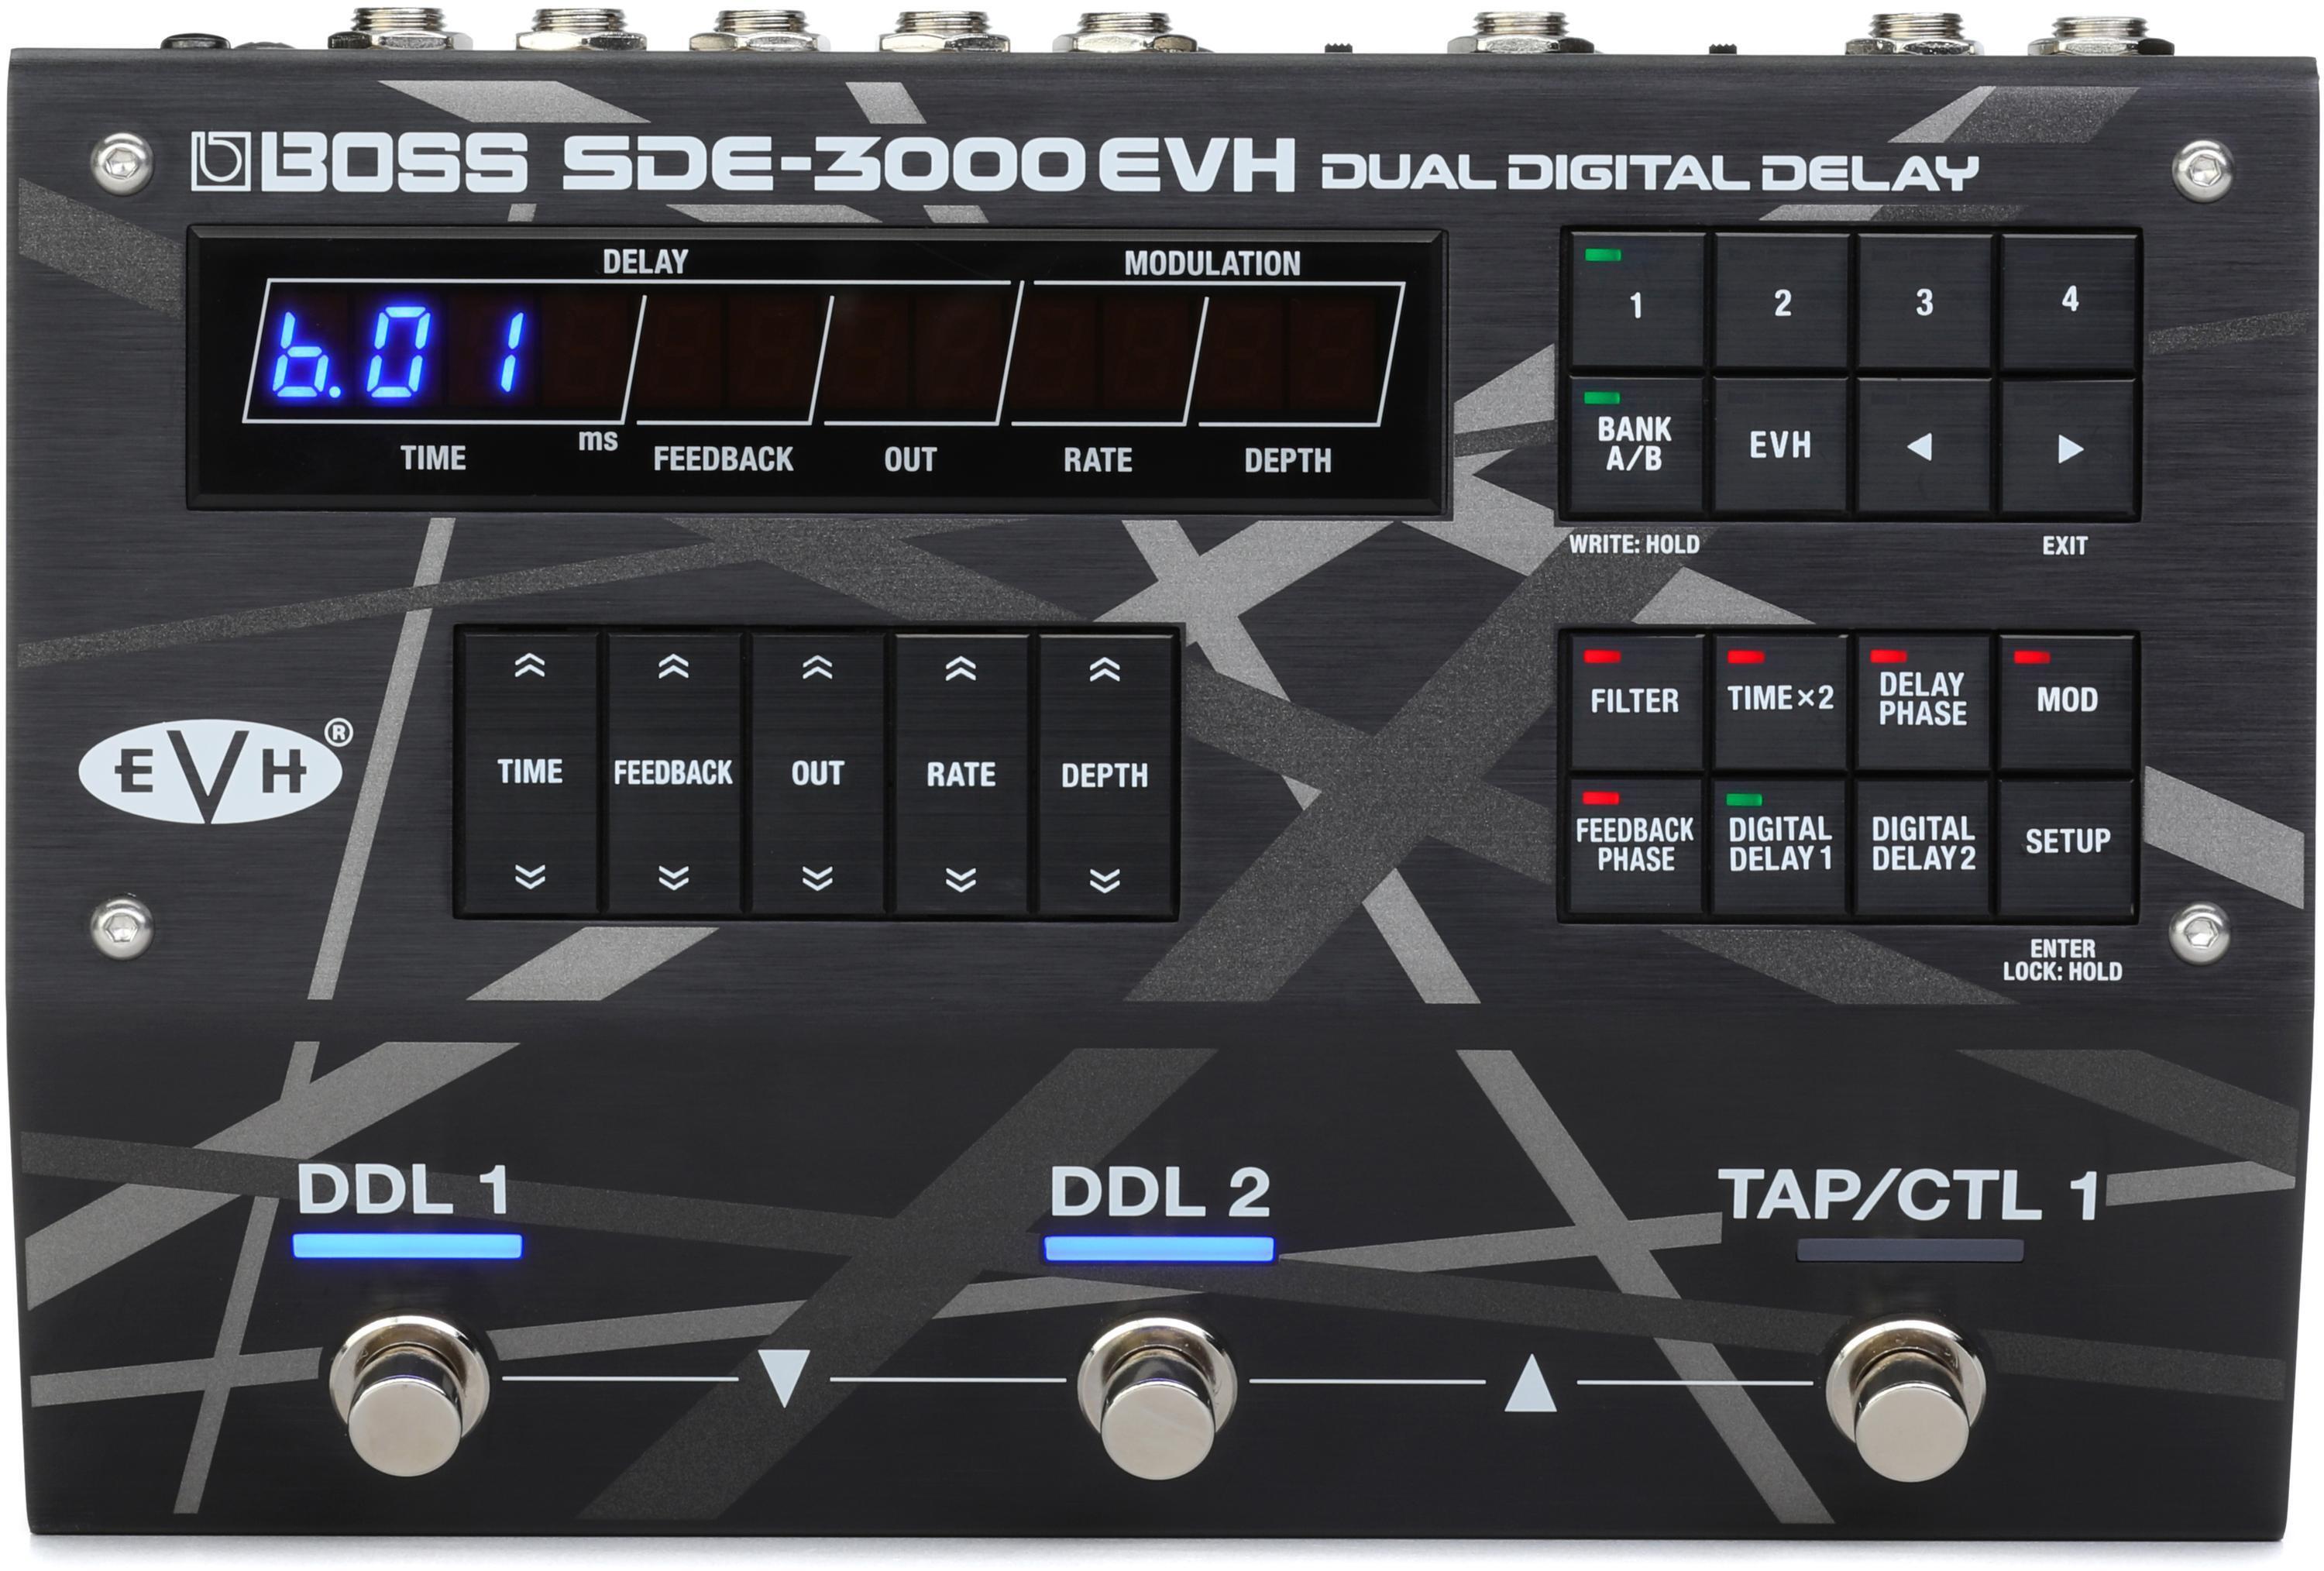 Bundled Item: Boss SDE-3000EVH Dual Digital Delay Pedal